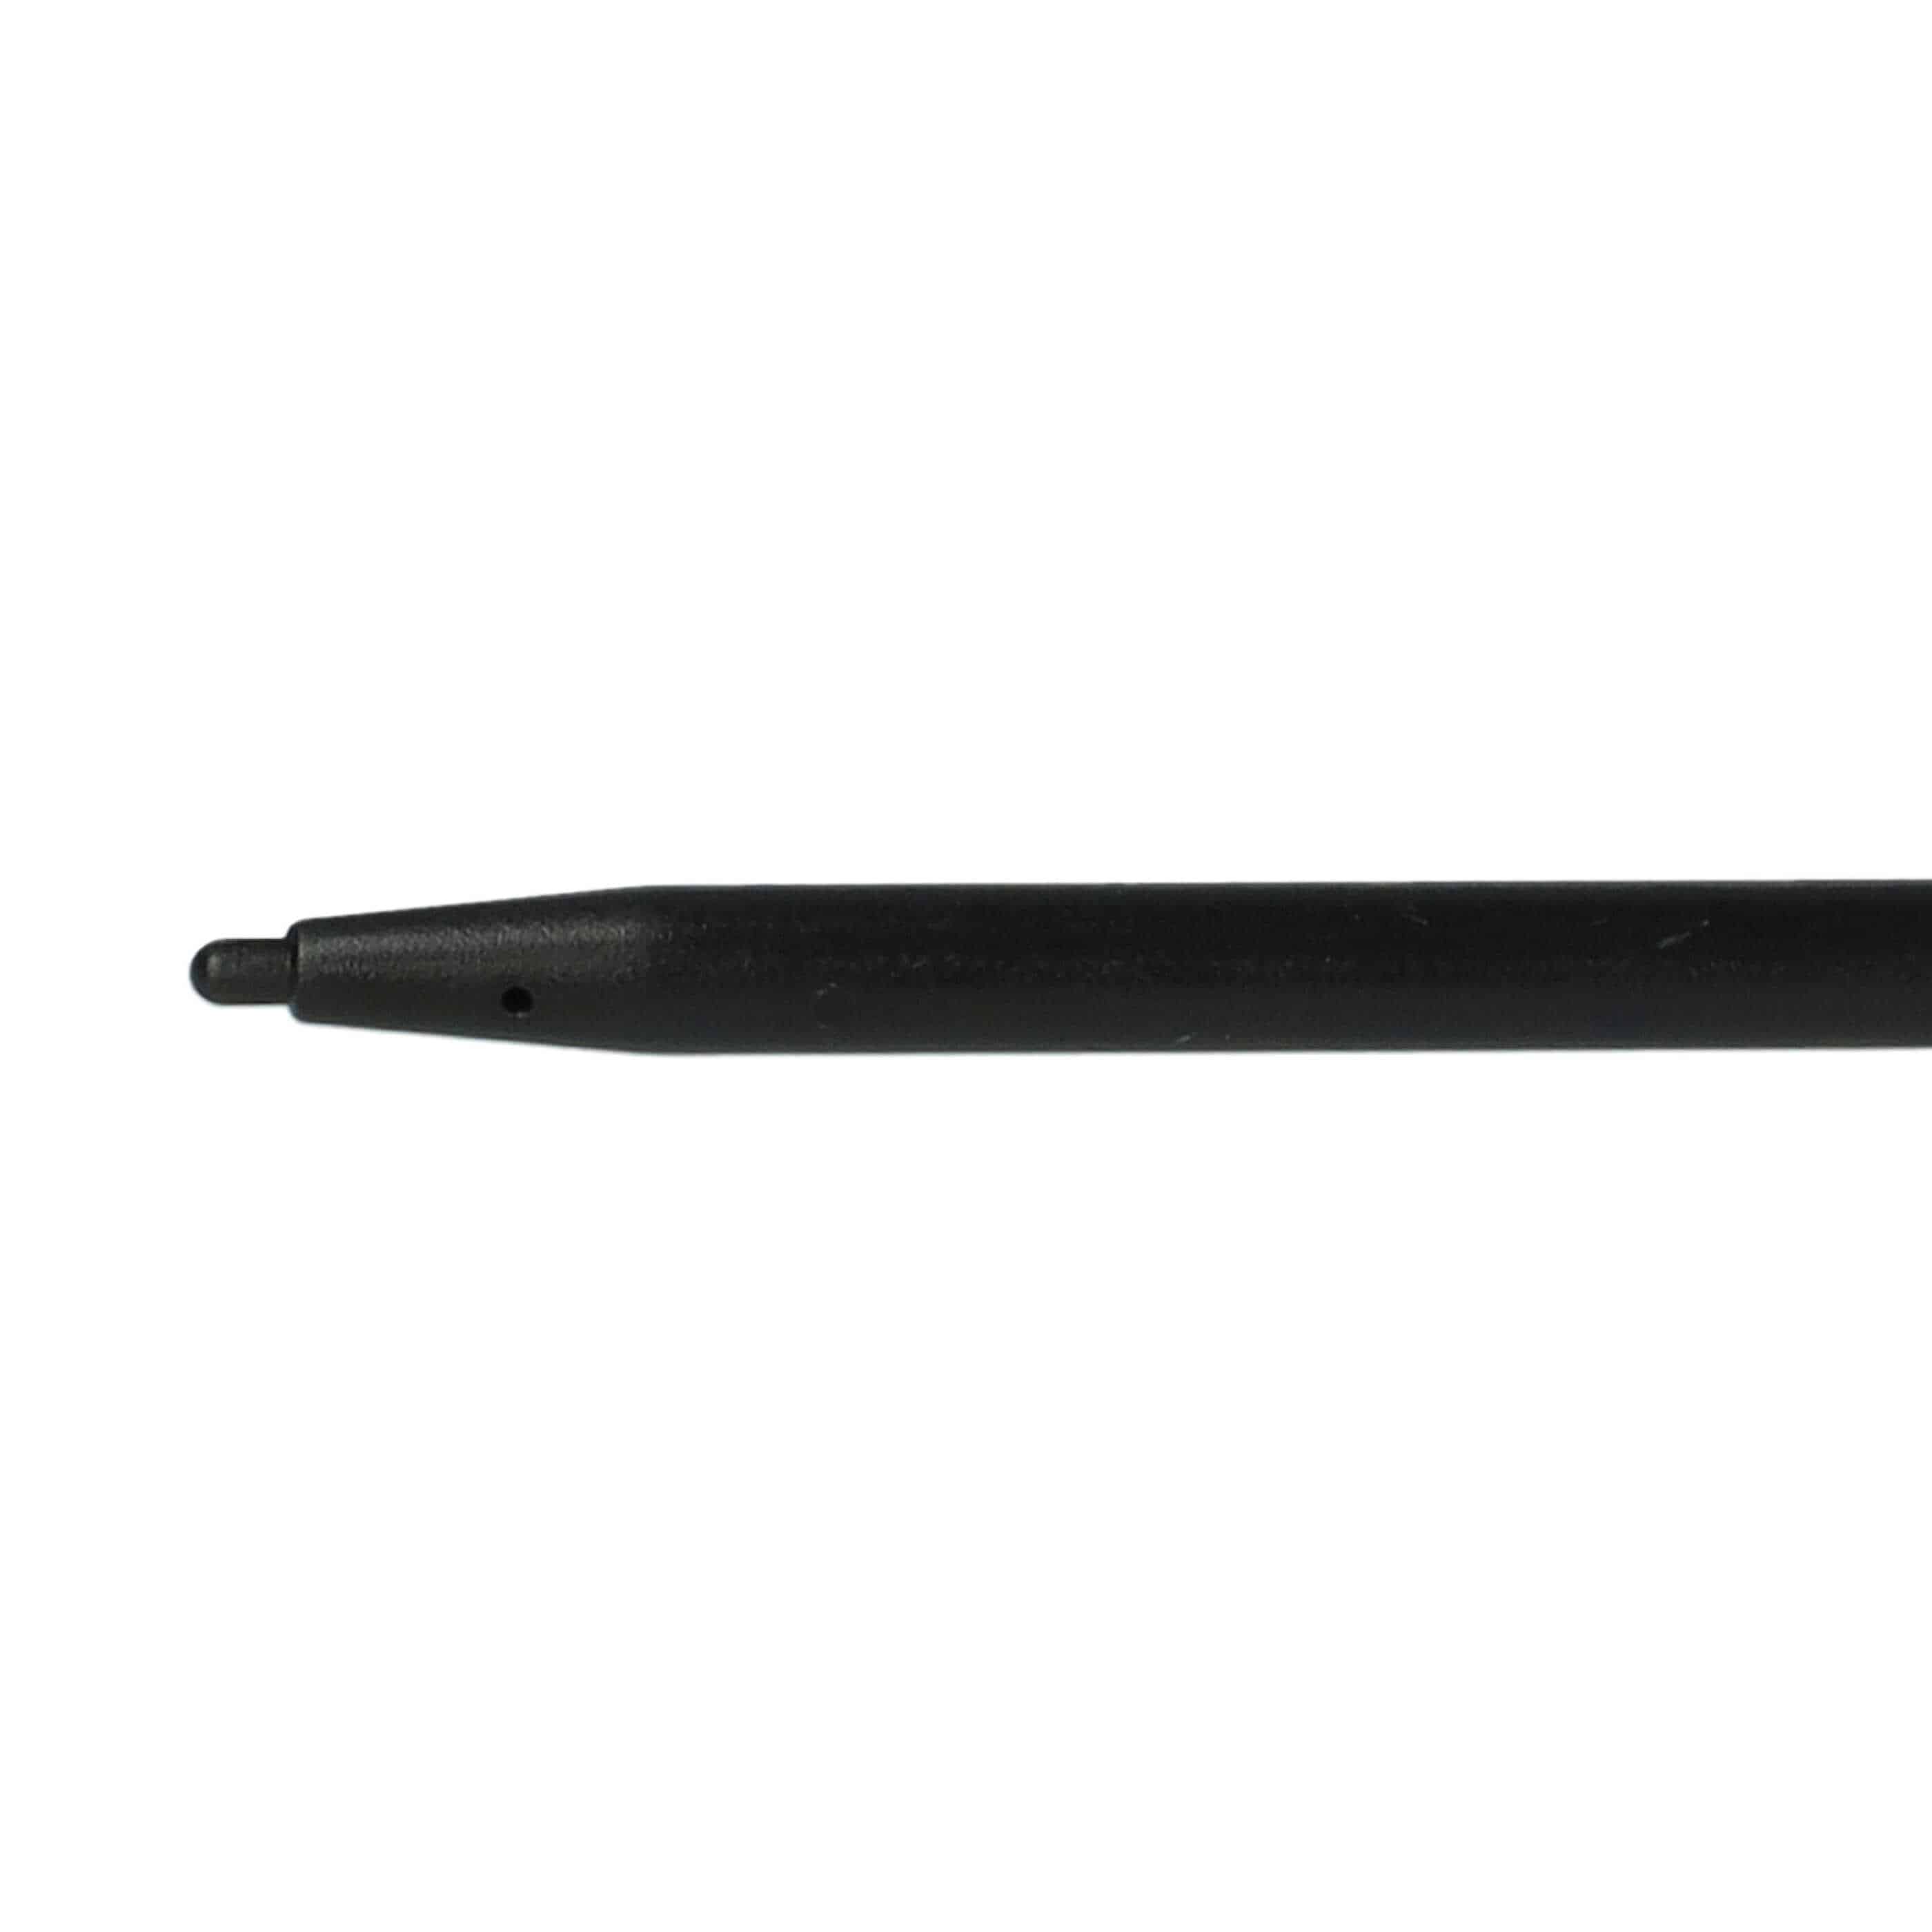 10x Rysik touch pen do konsoli Nintendo DSi, DSi XL, DS Lite - czarny, biały